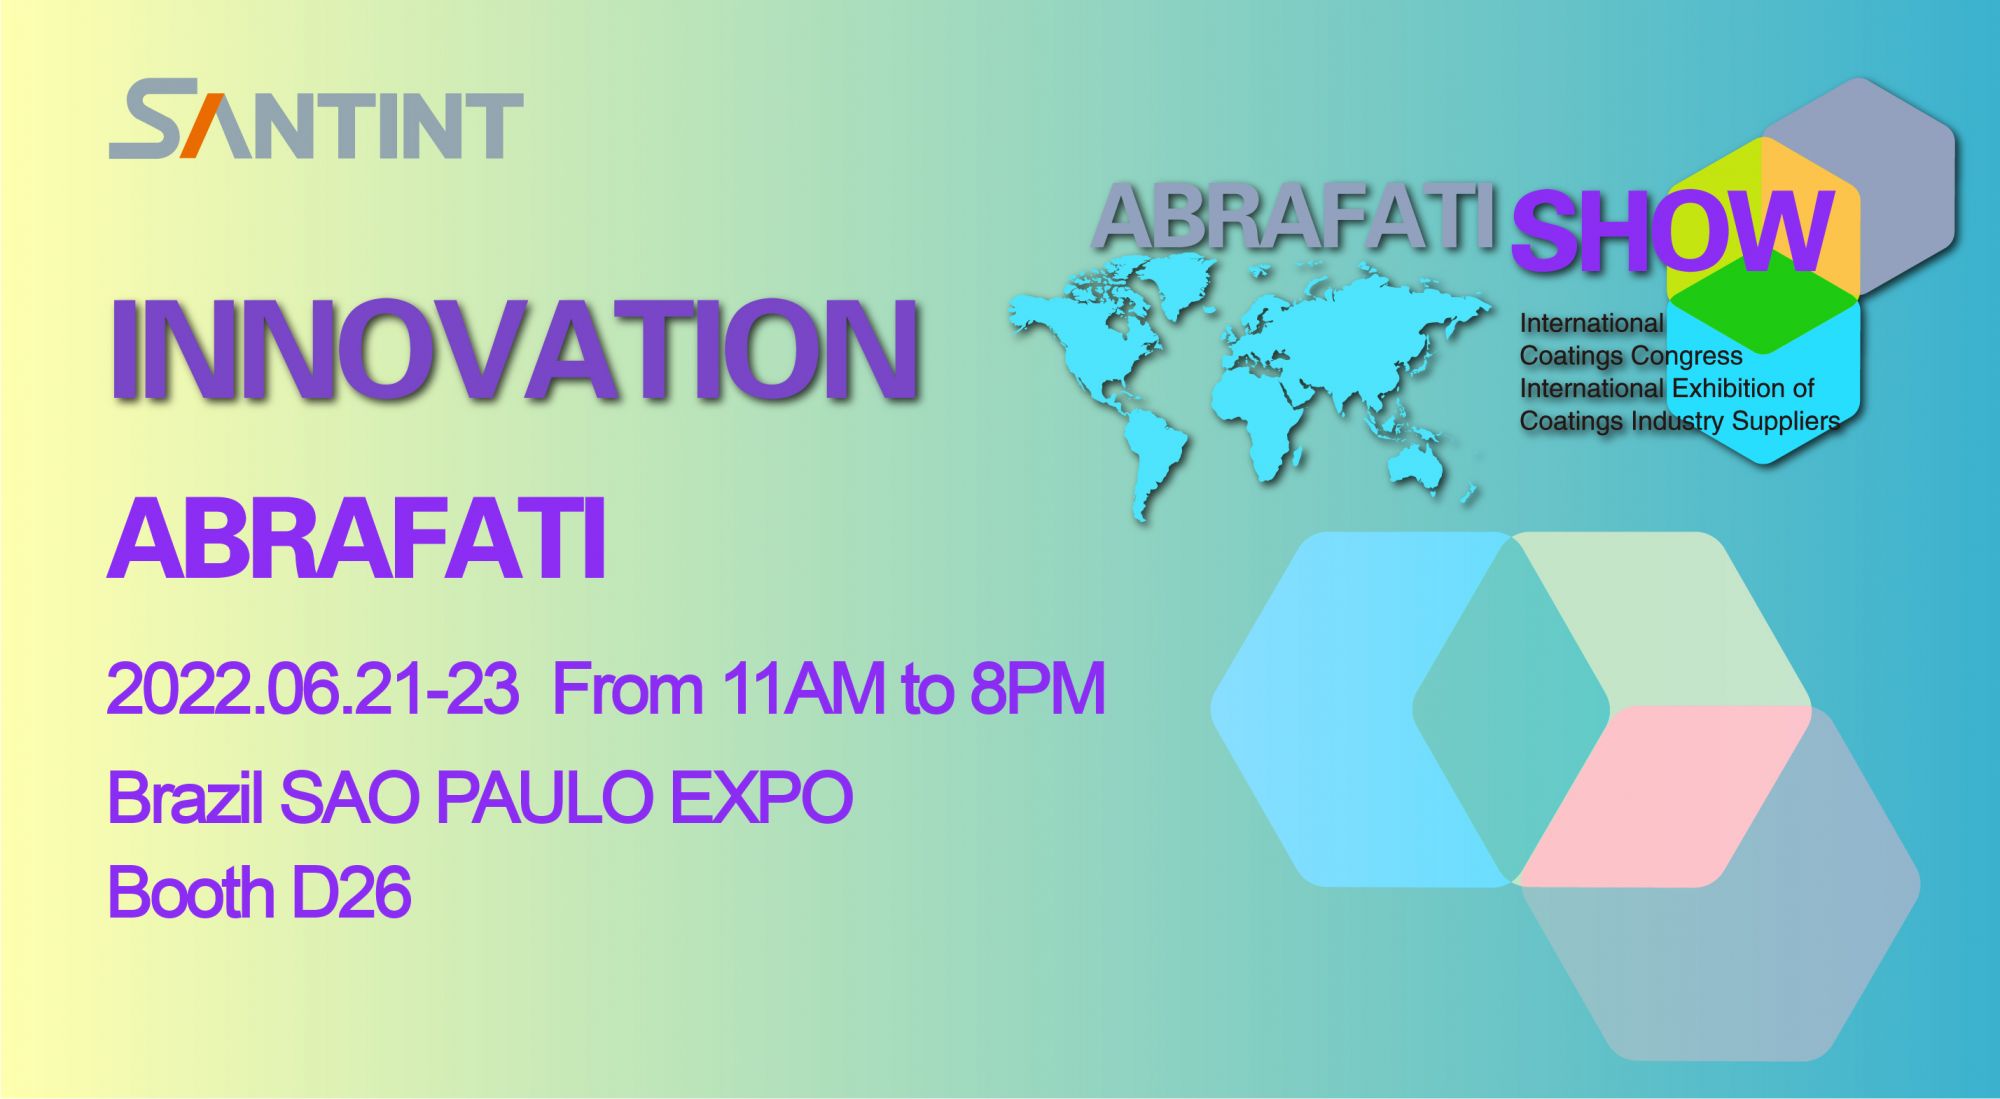 SANTINT INVITATION OF ABRAFATI 2022